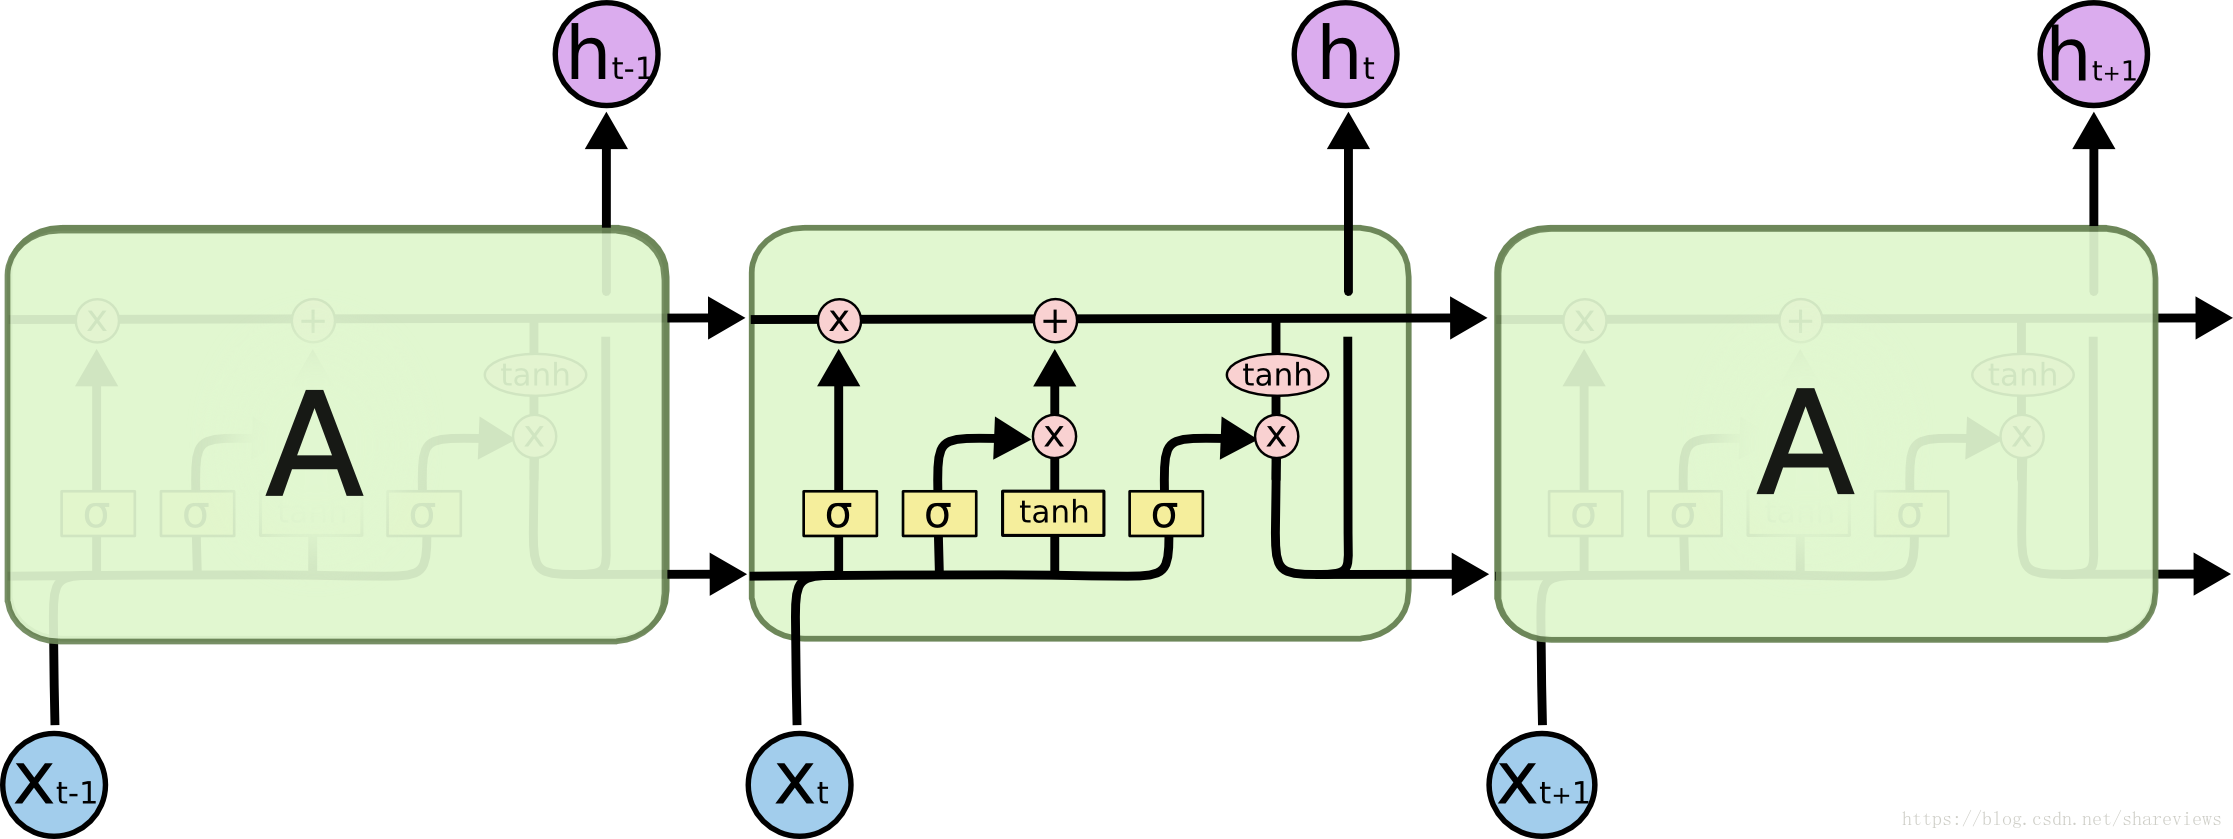 LSTM网络模型的架构